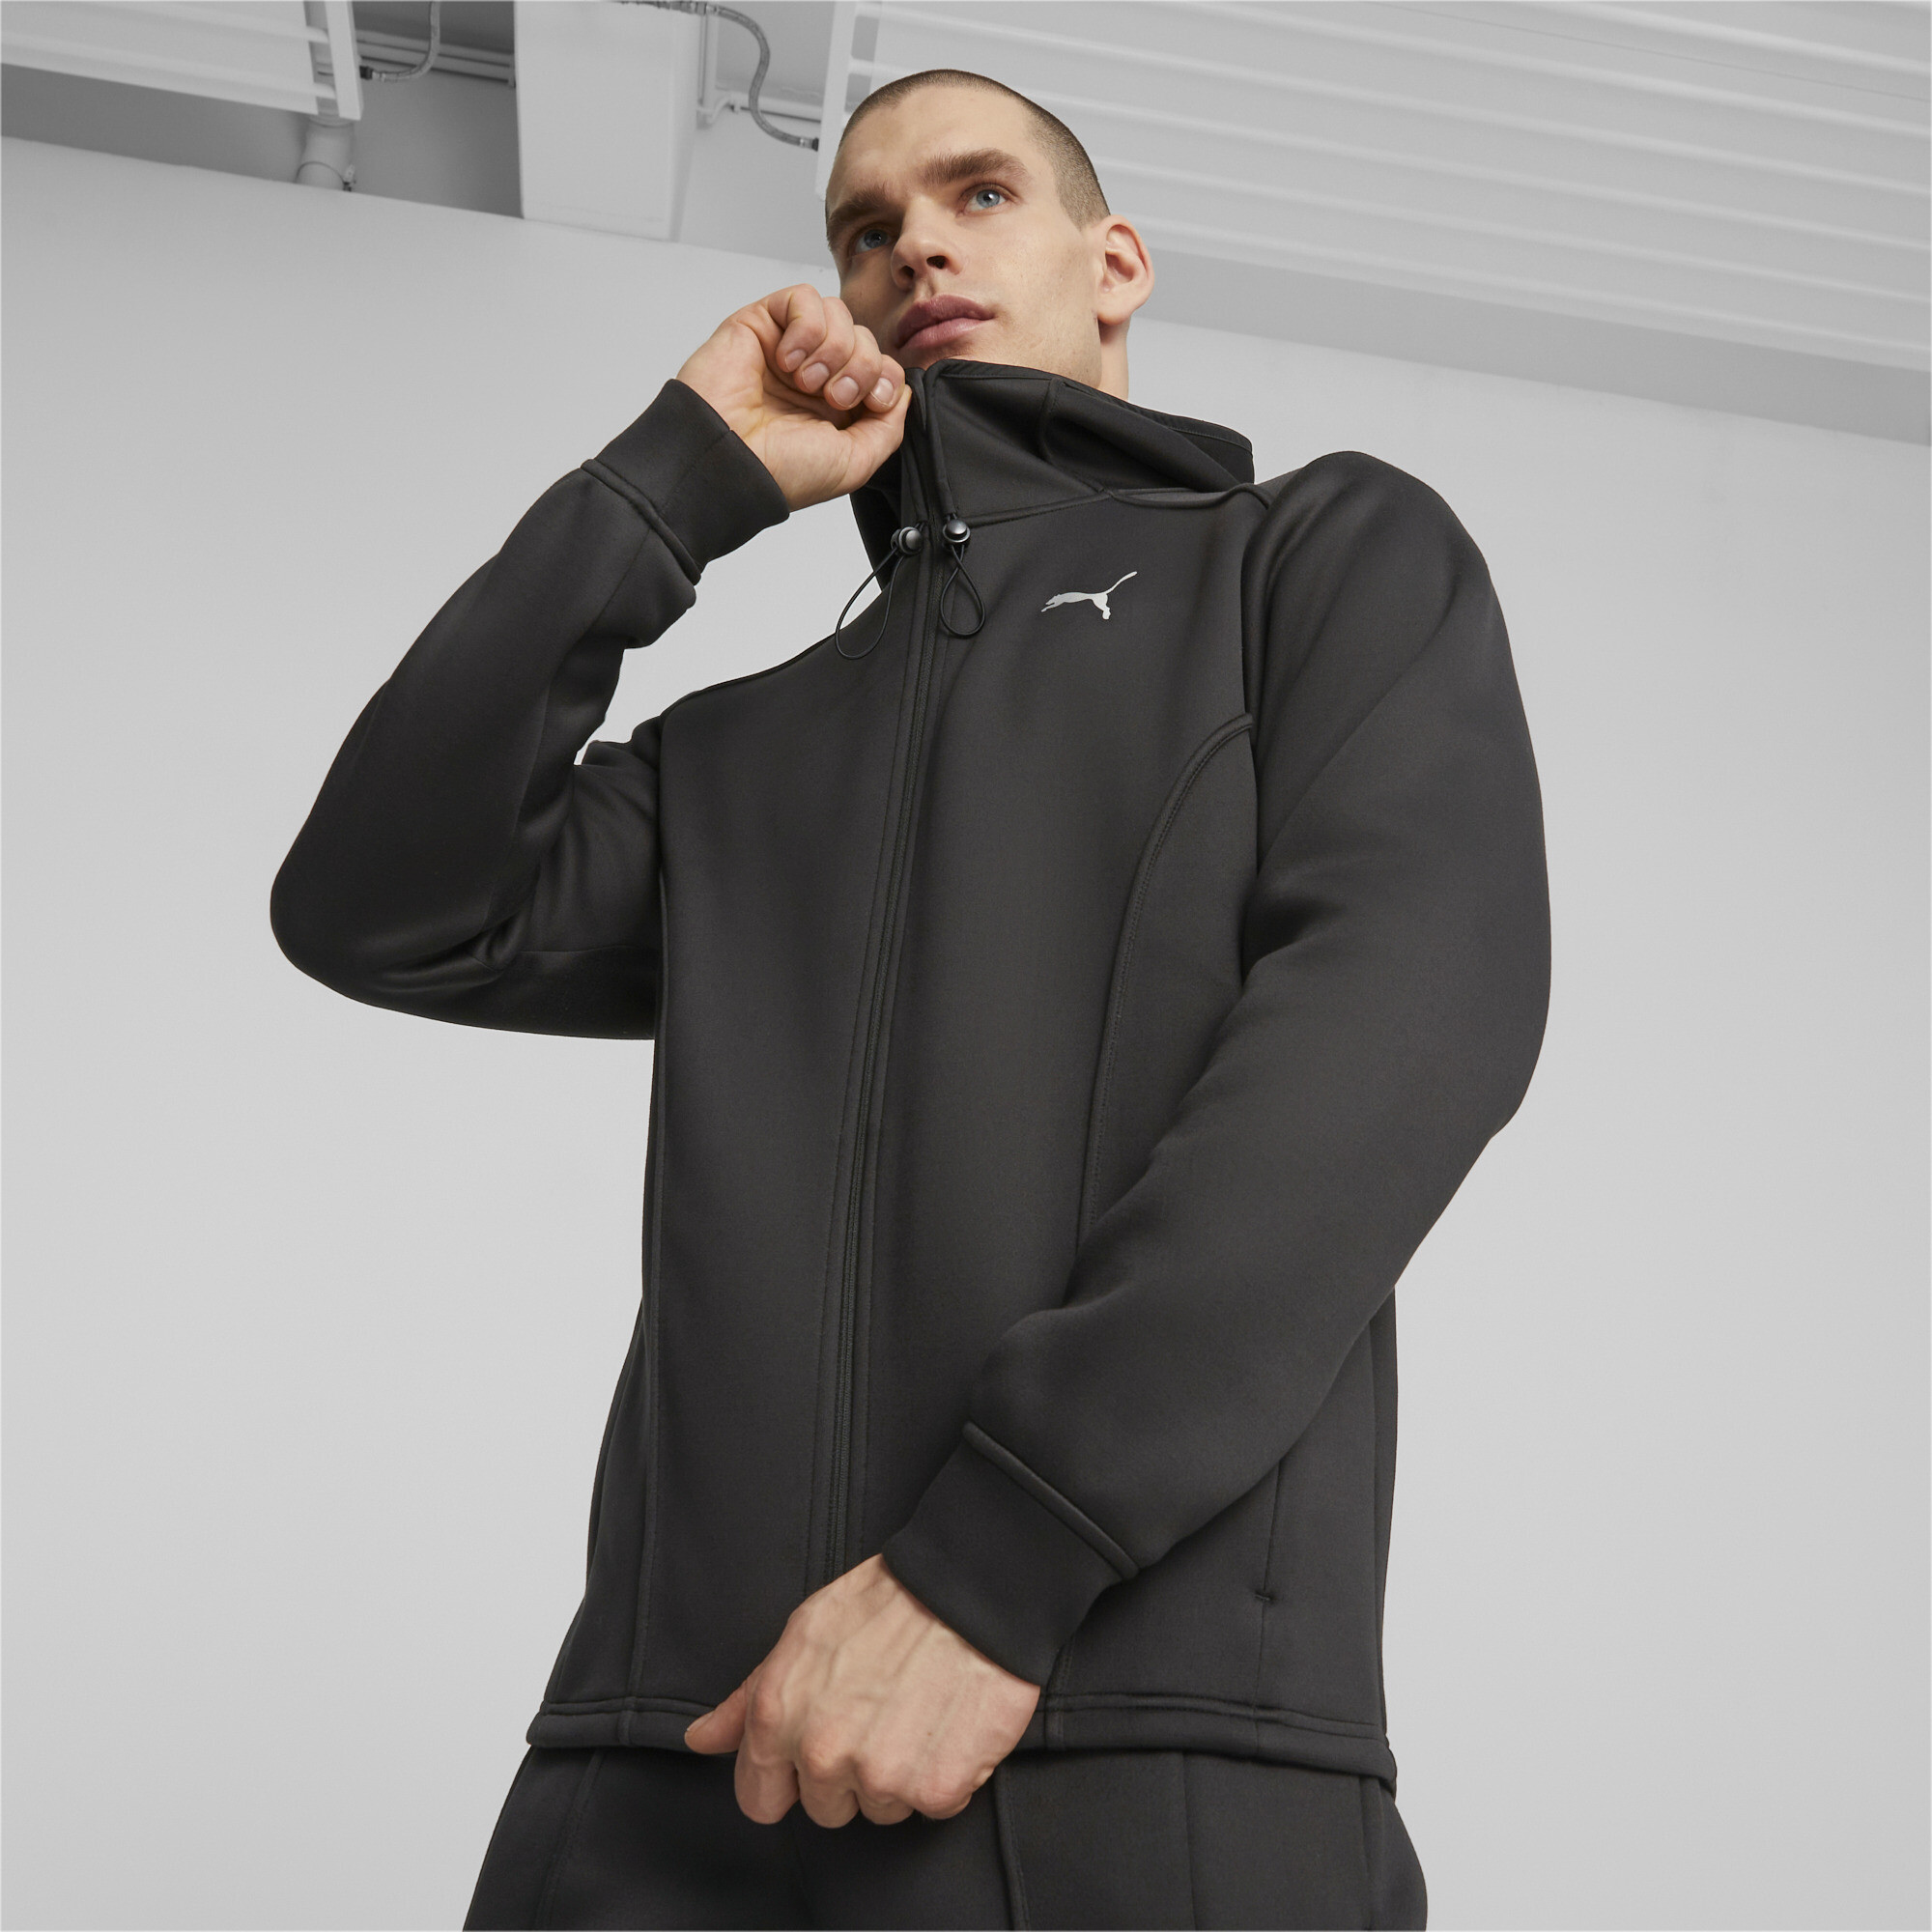 Men's Puma CLOUDSPUN TECHLBL Full-zip's Jacket, Black, Size L, Sport